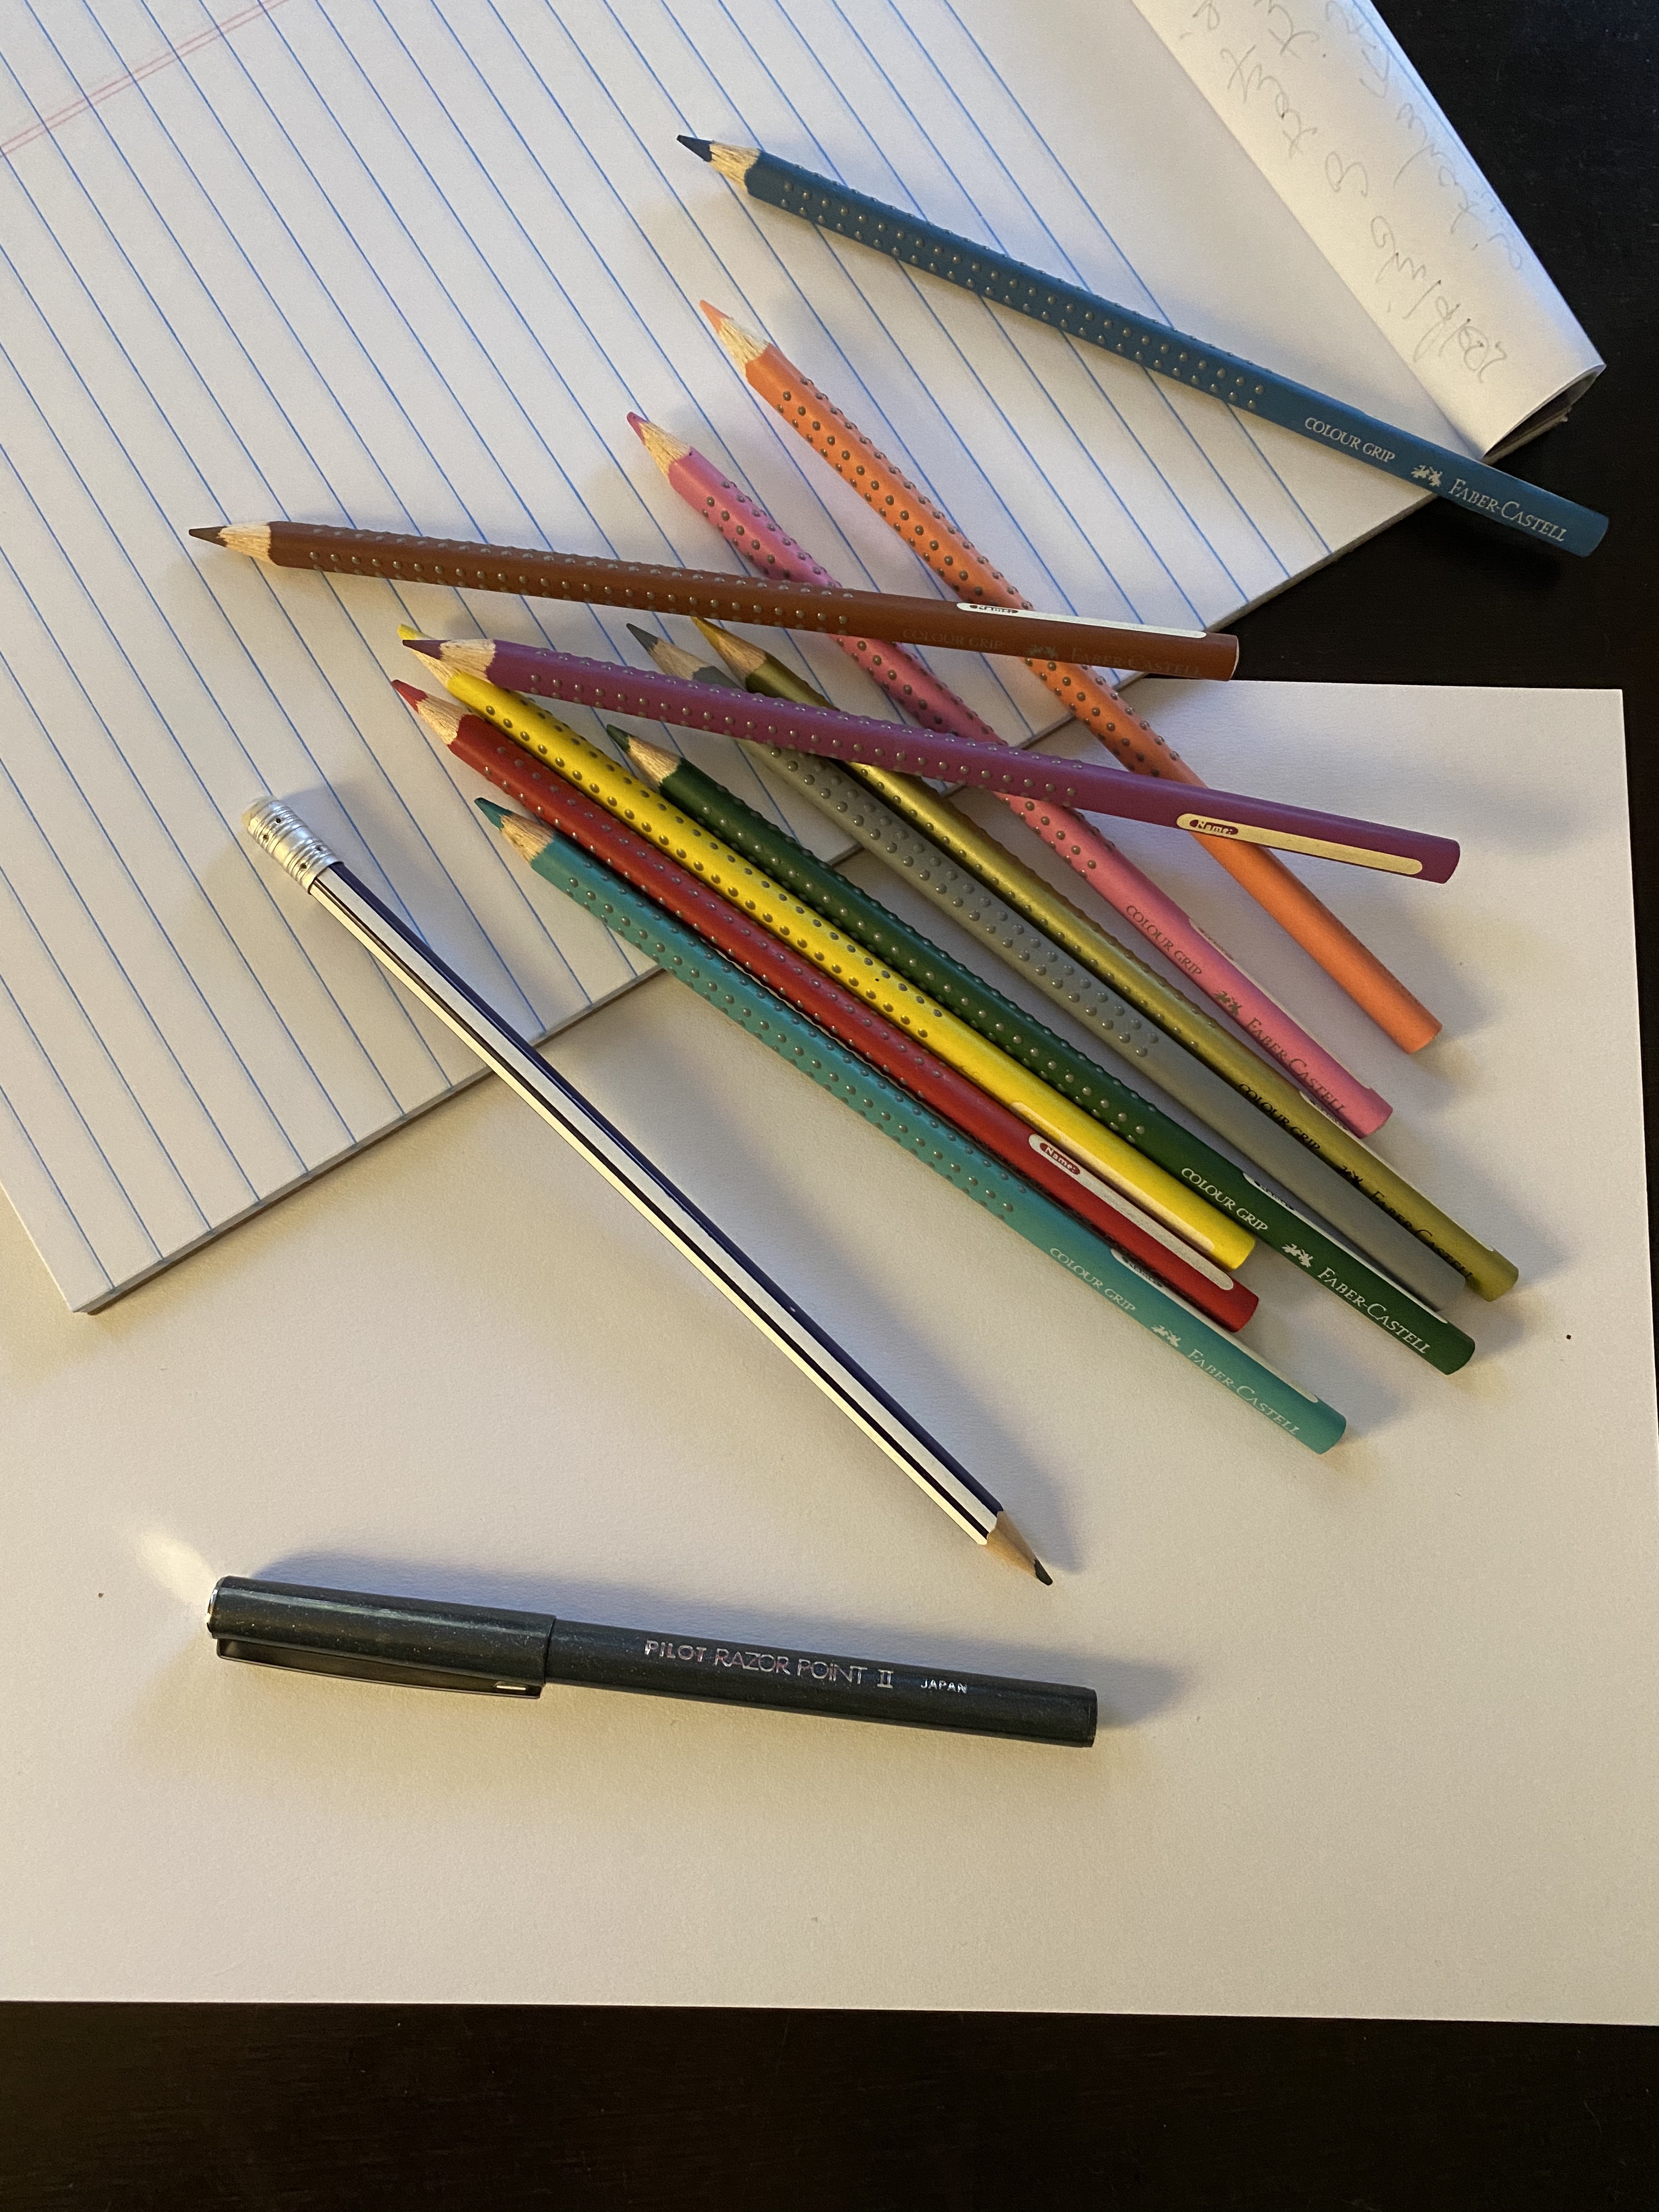 Pencils, pens on paper